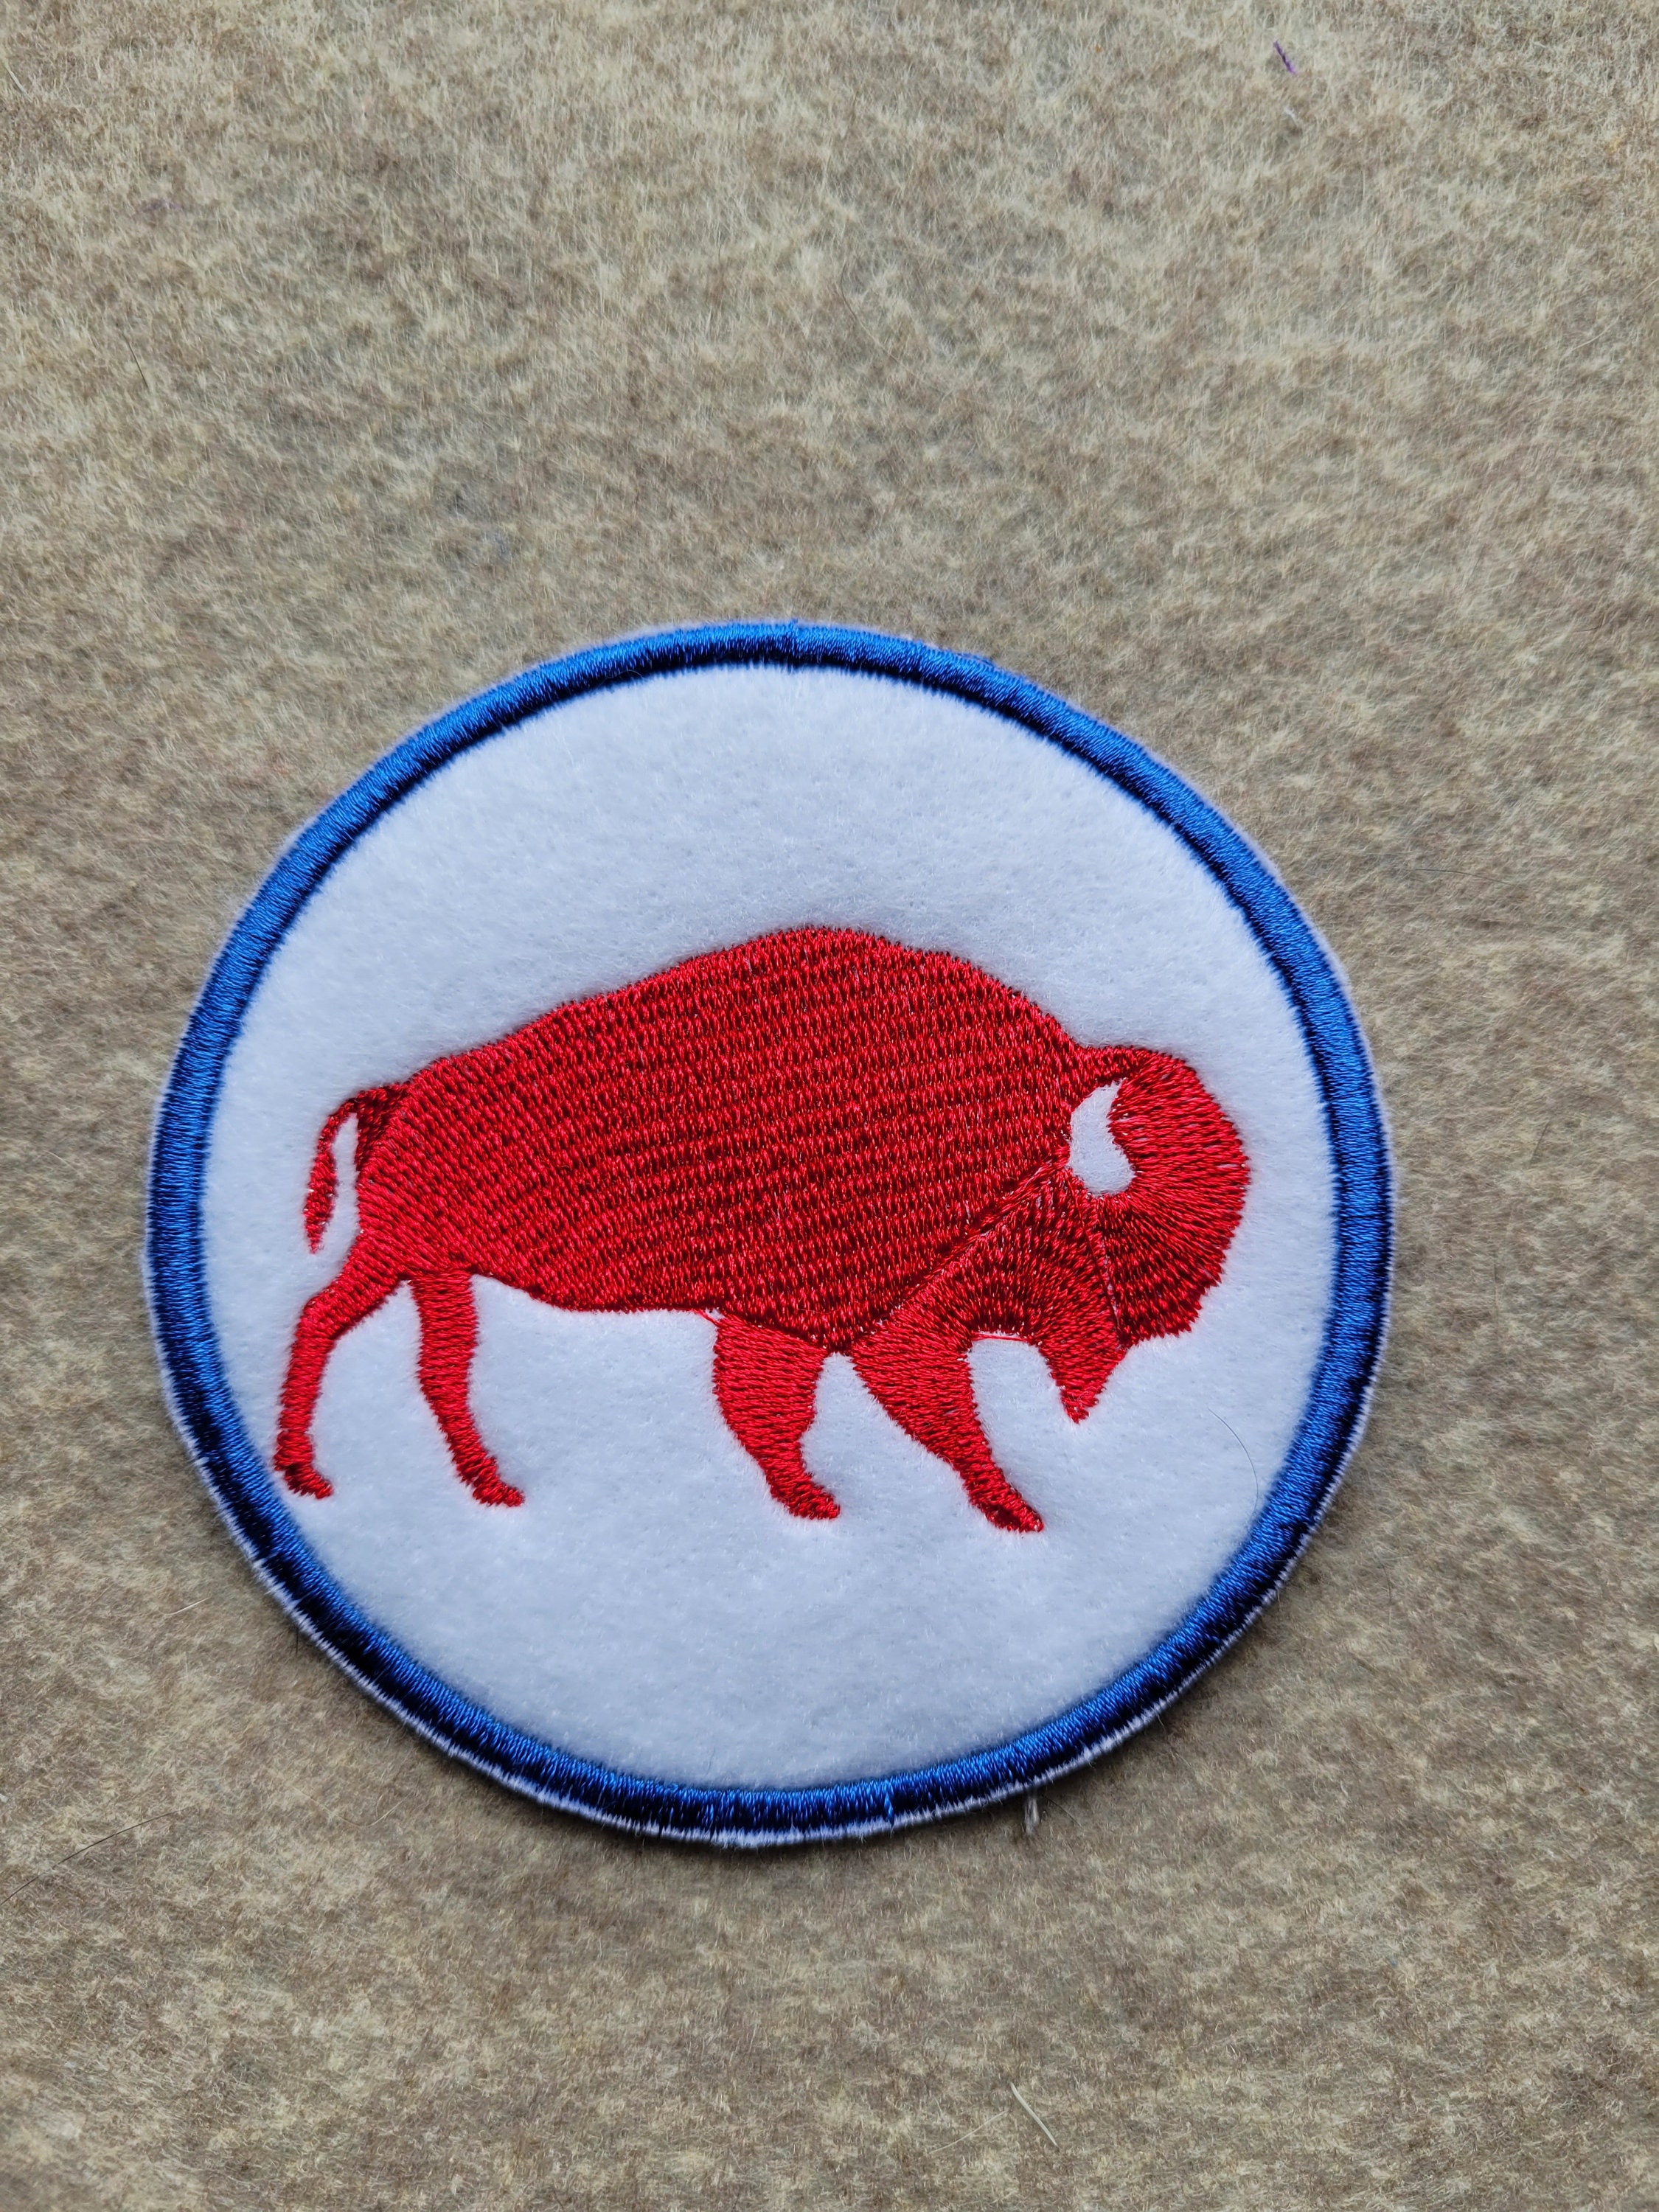 Buffalo Bills BIG 9.5 Jacket Size Iron/Sew On Embroidered Patch ~FREE  Shipping!